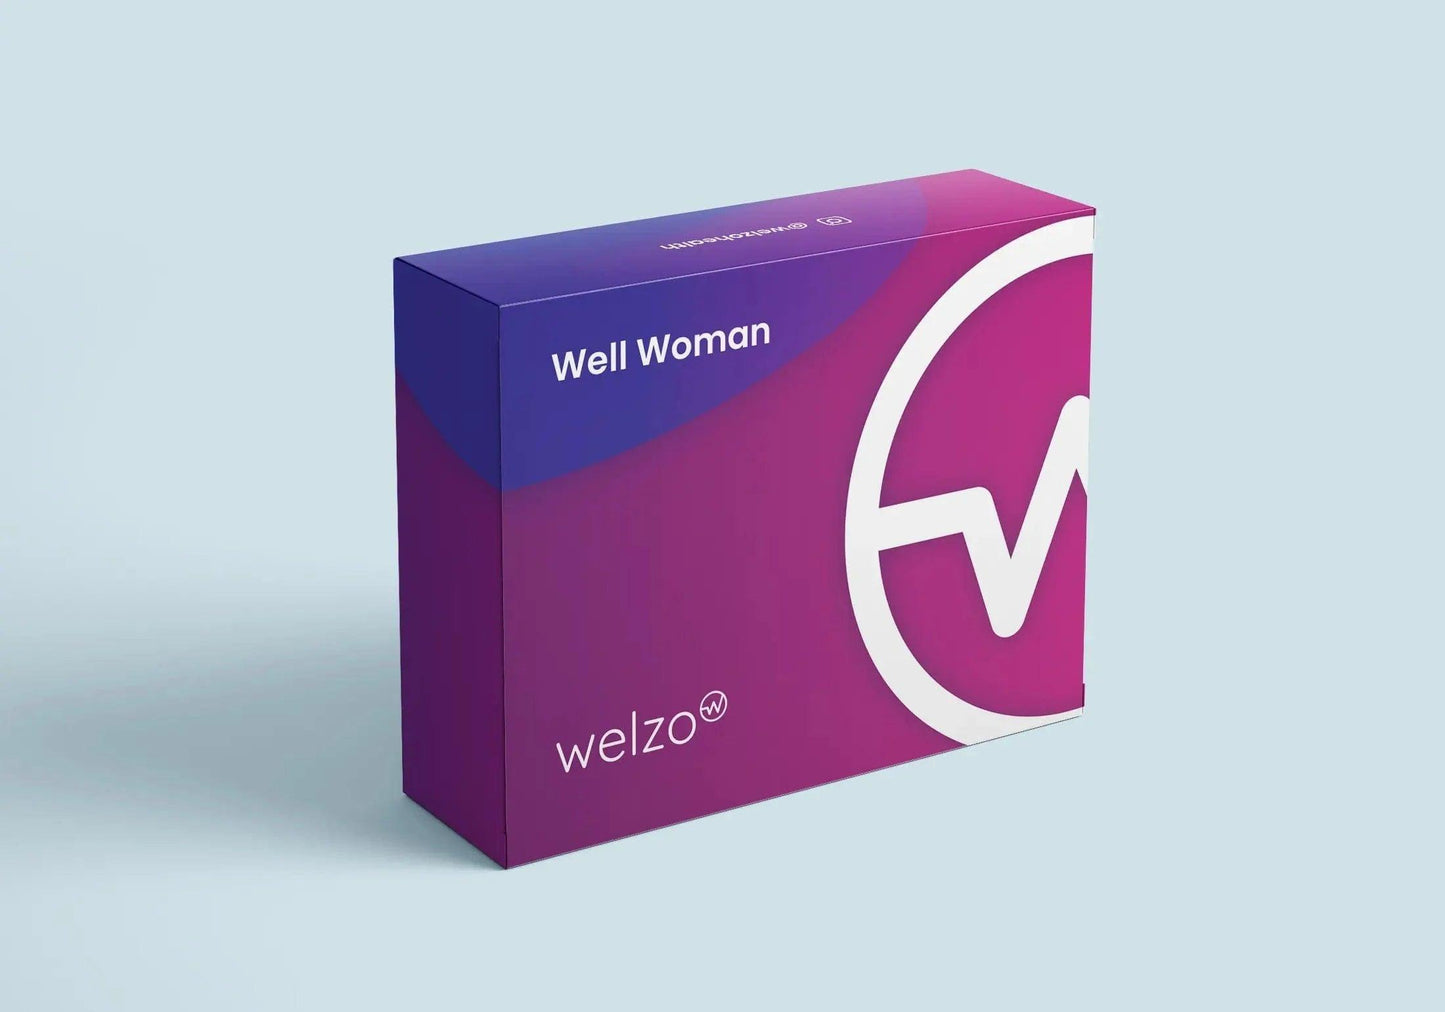 Wellness Duo: Wellman & Well Woman - welzo